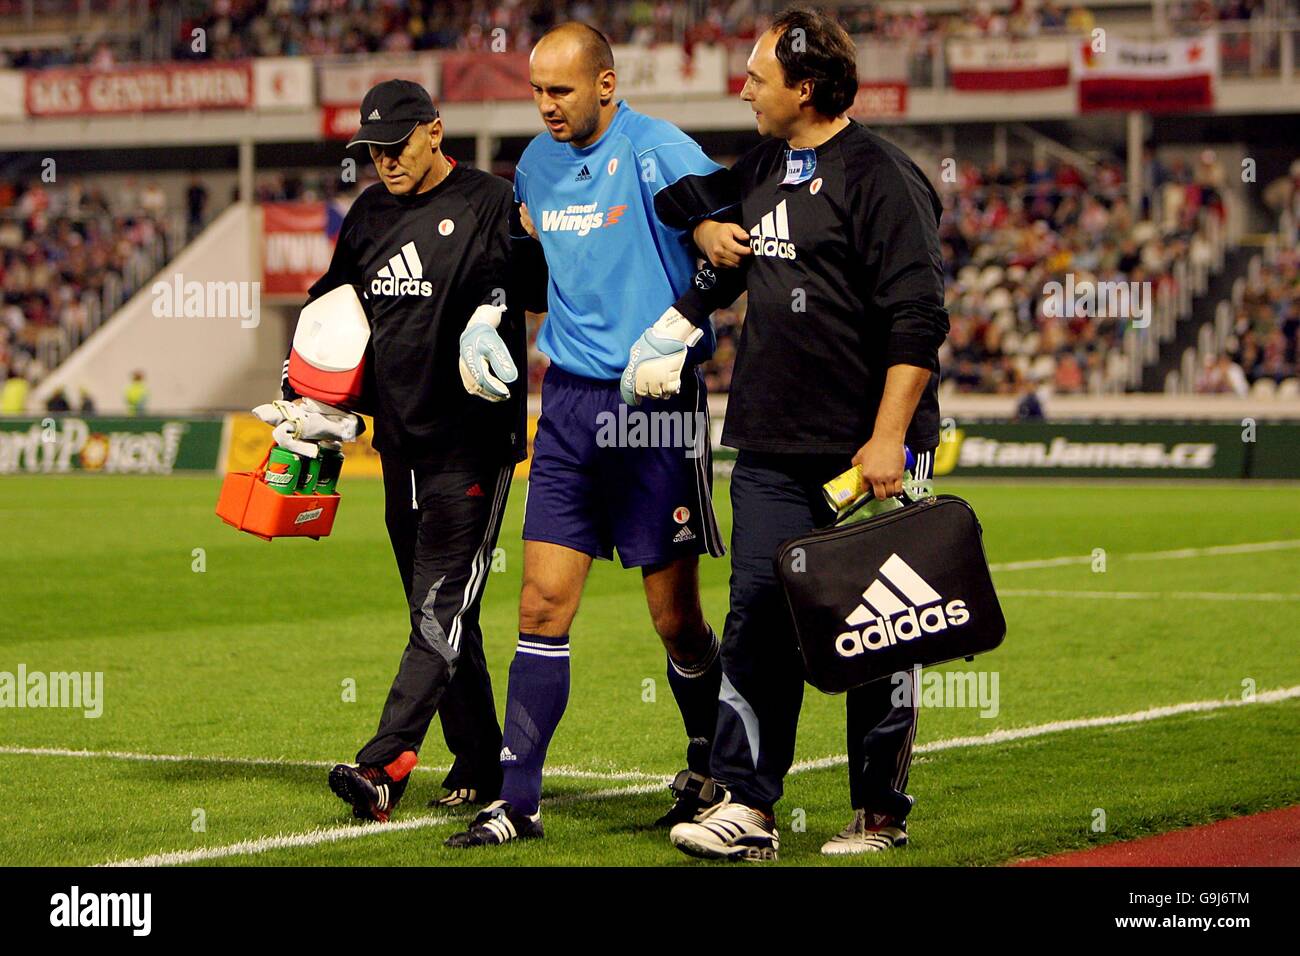 Slavia Prague's goalkeeper M Vorel is taken off injured Stock Photo